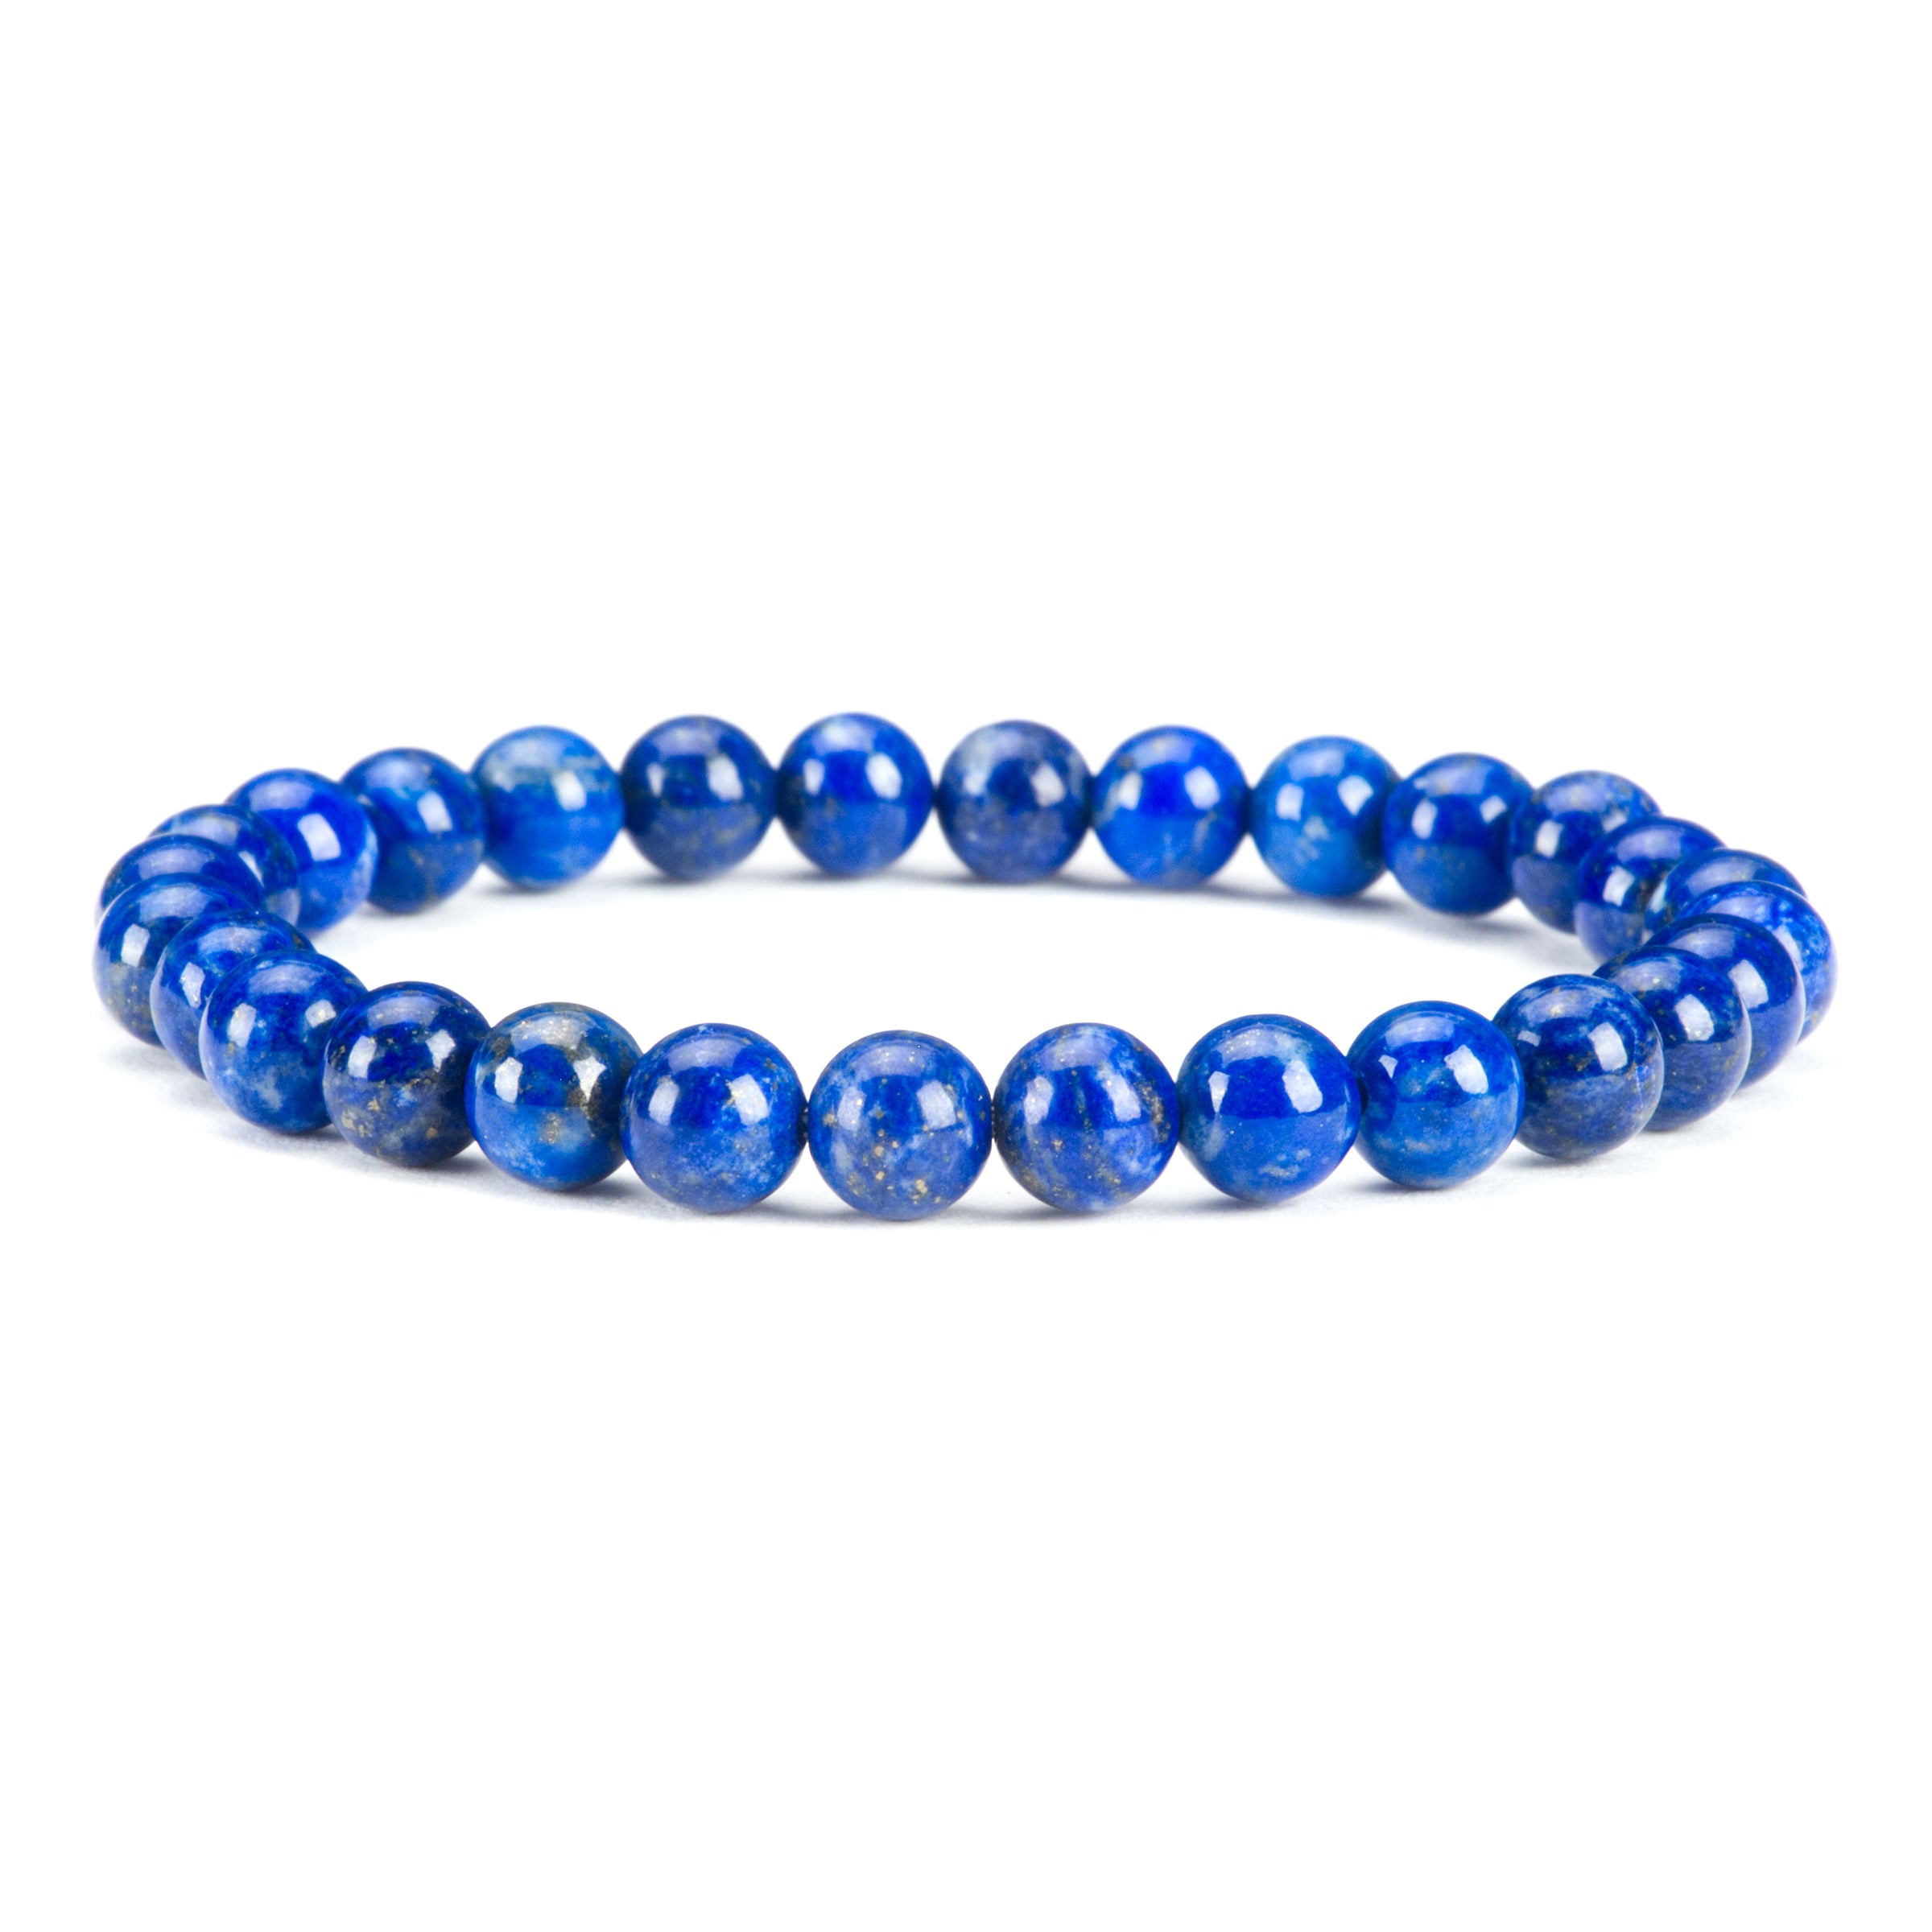 Stretch Bracelet | 6mm Beads (lapis) Medium